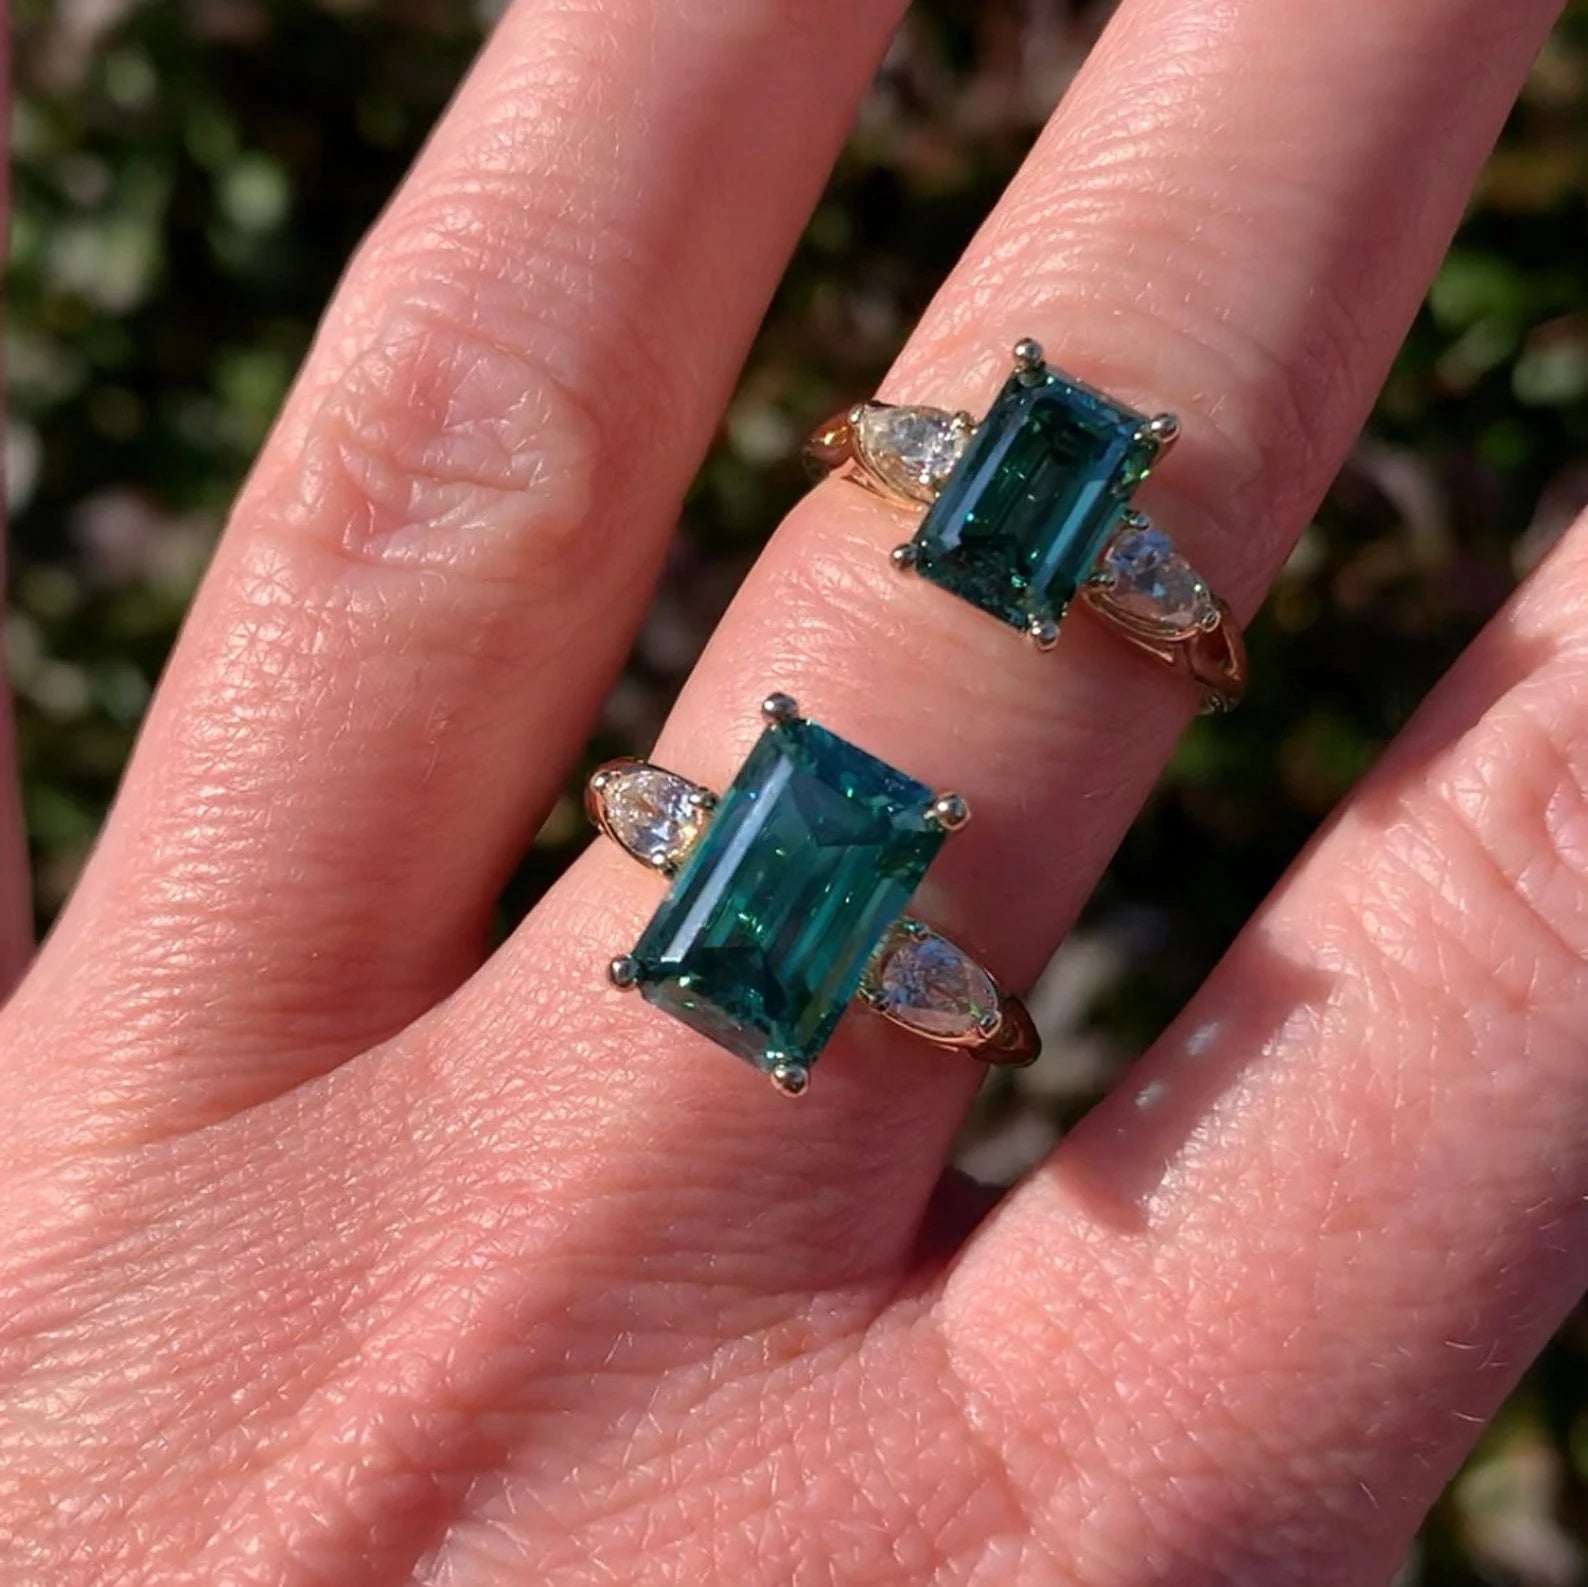 crazy rich asians ring - 4 carat green moissanite ring, emerald cut ZAYA moissanite - J Hollywood Designs